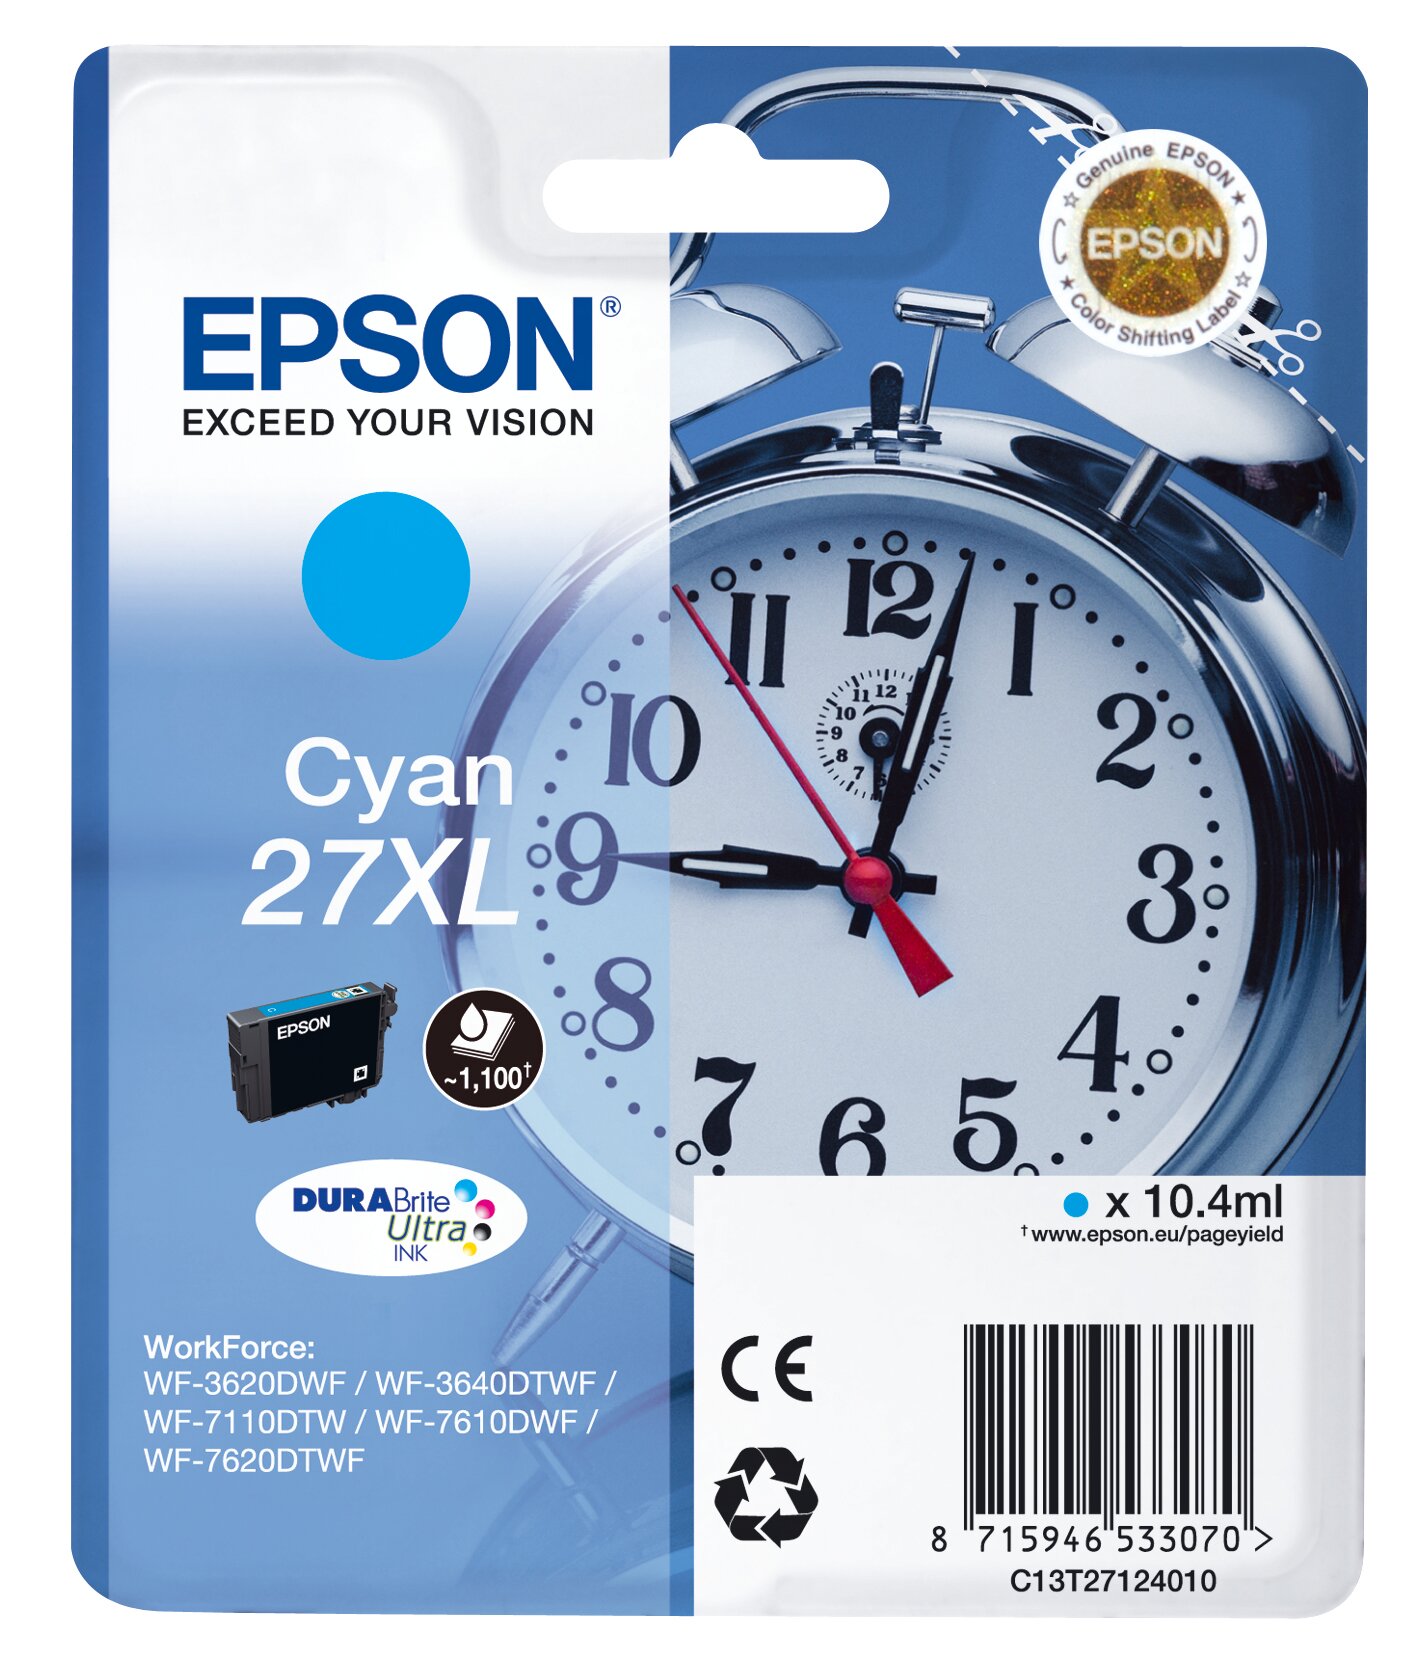 Epson 27XL cartridge cyan T27124010 inkjet